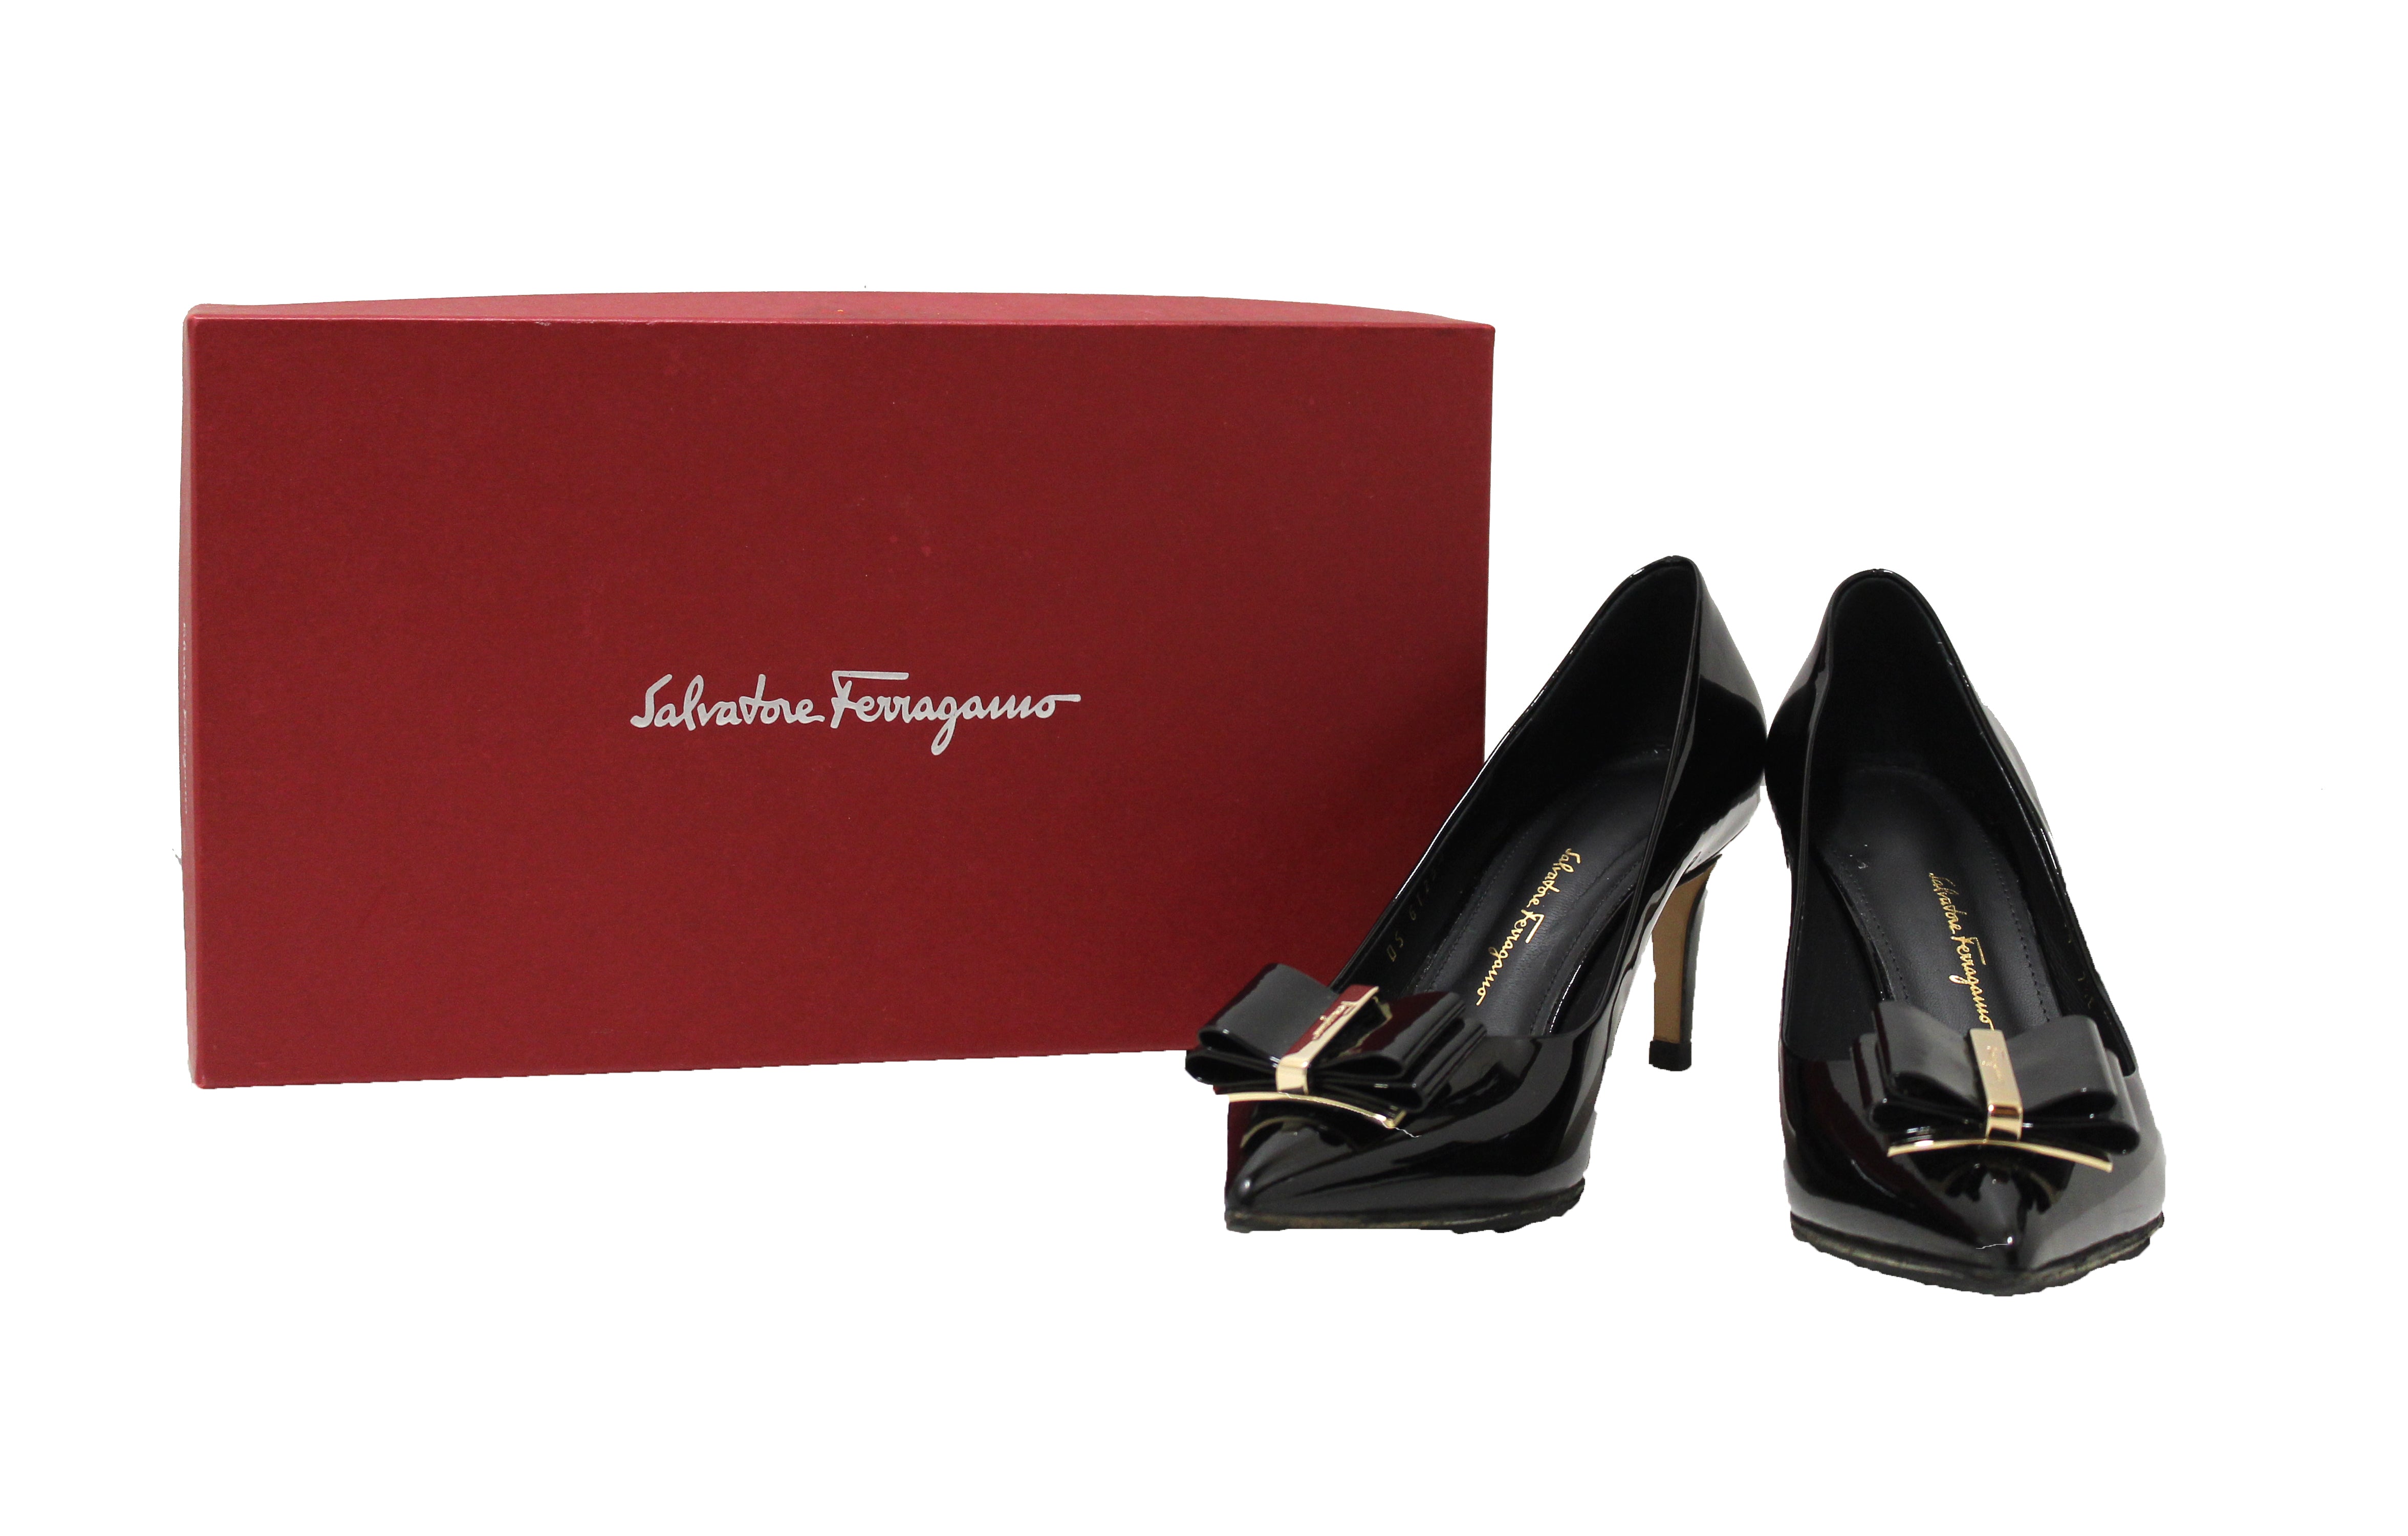 Authentic Salvatore Ferragamo Black Patent Leather Zeri Pointed Toe Pump Size 7.5